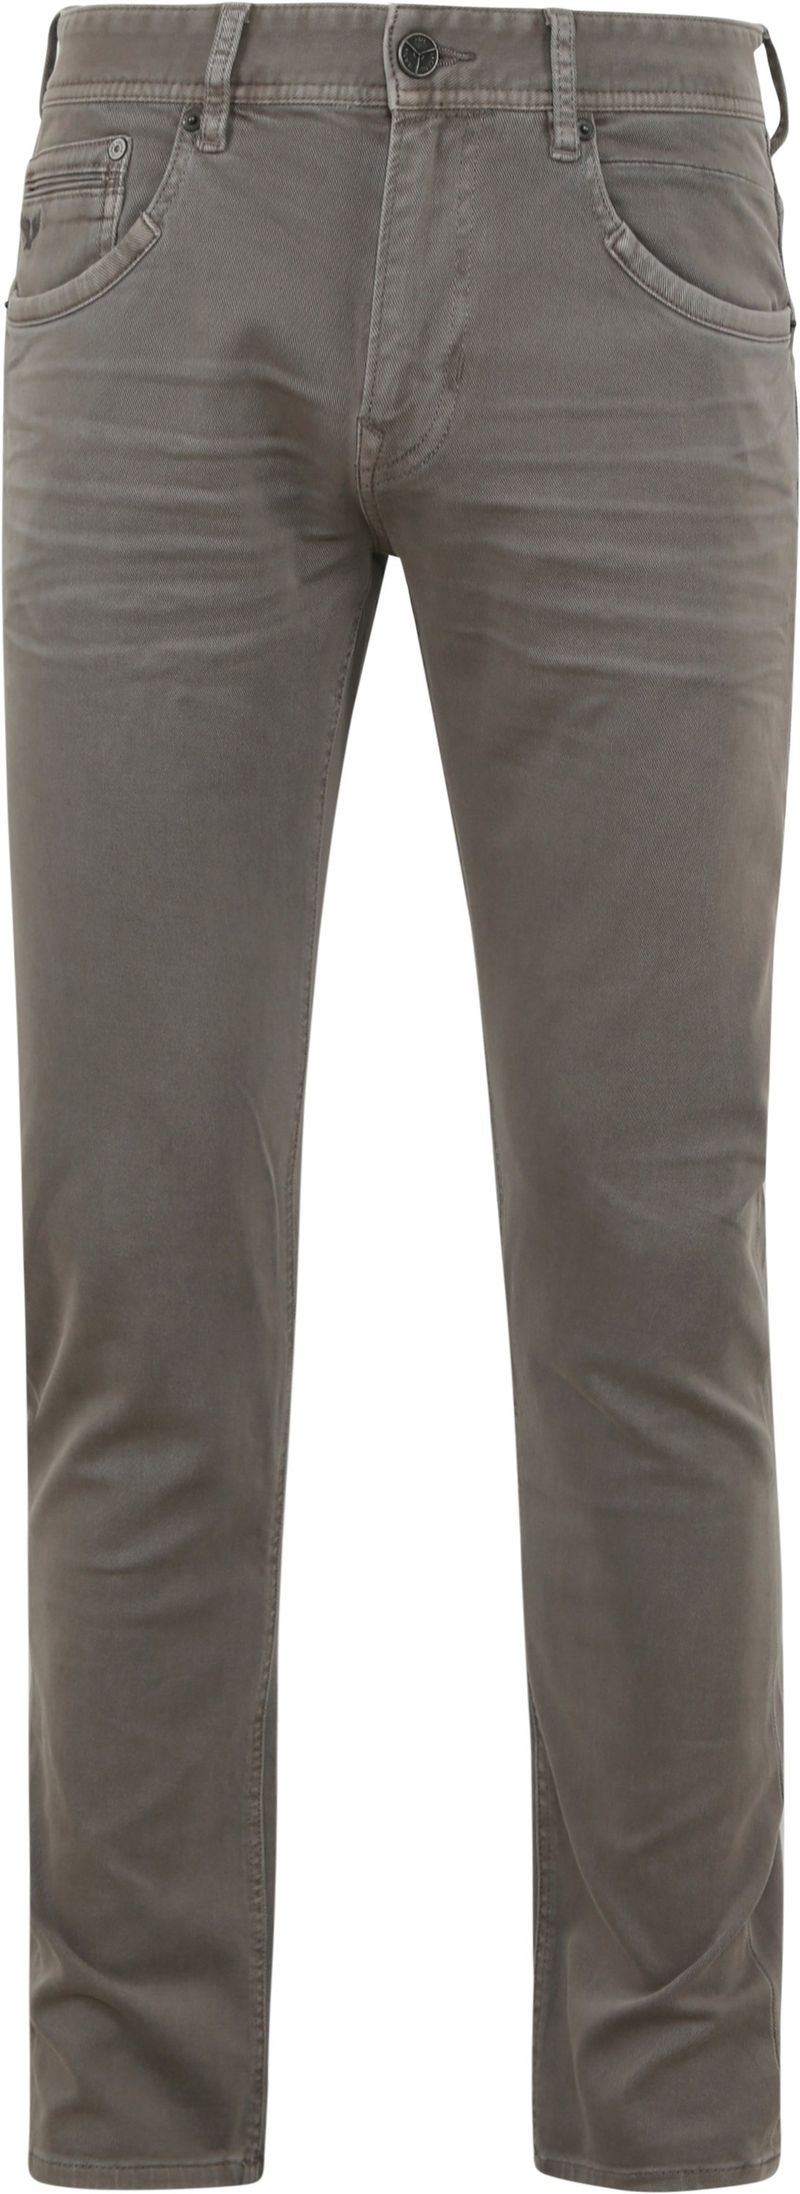 PME Legend Tailwheel Jeans Braun Grau - Größe W 31 - L 34 von PME Legend